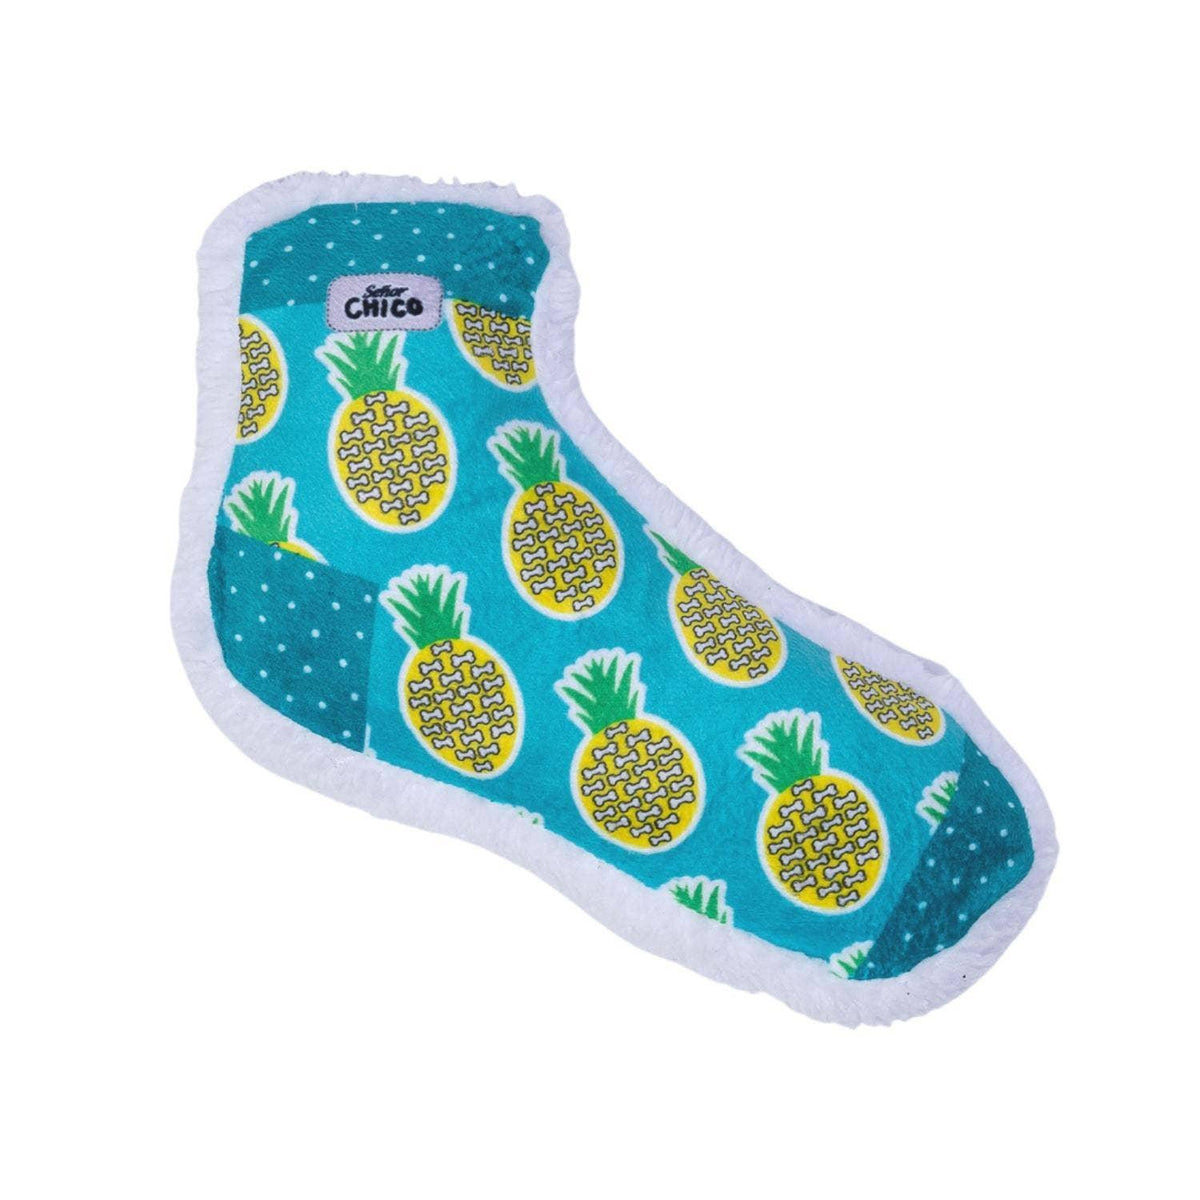 Squeaking Pineapple Comfort Plush Sock Dog Toy FajarShuruqSA